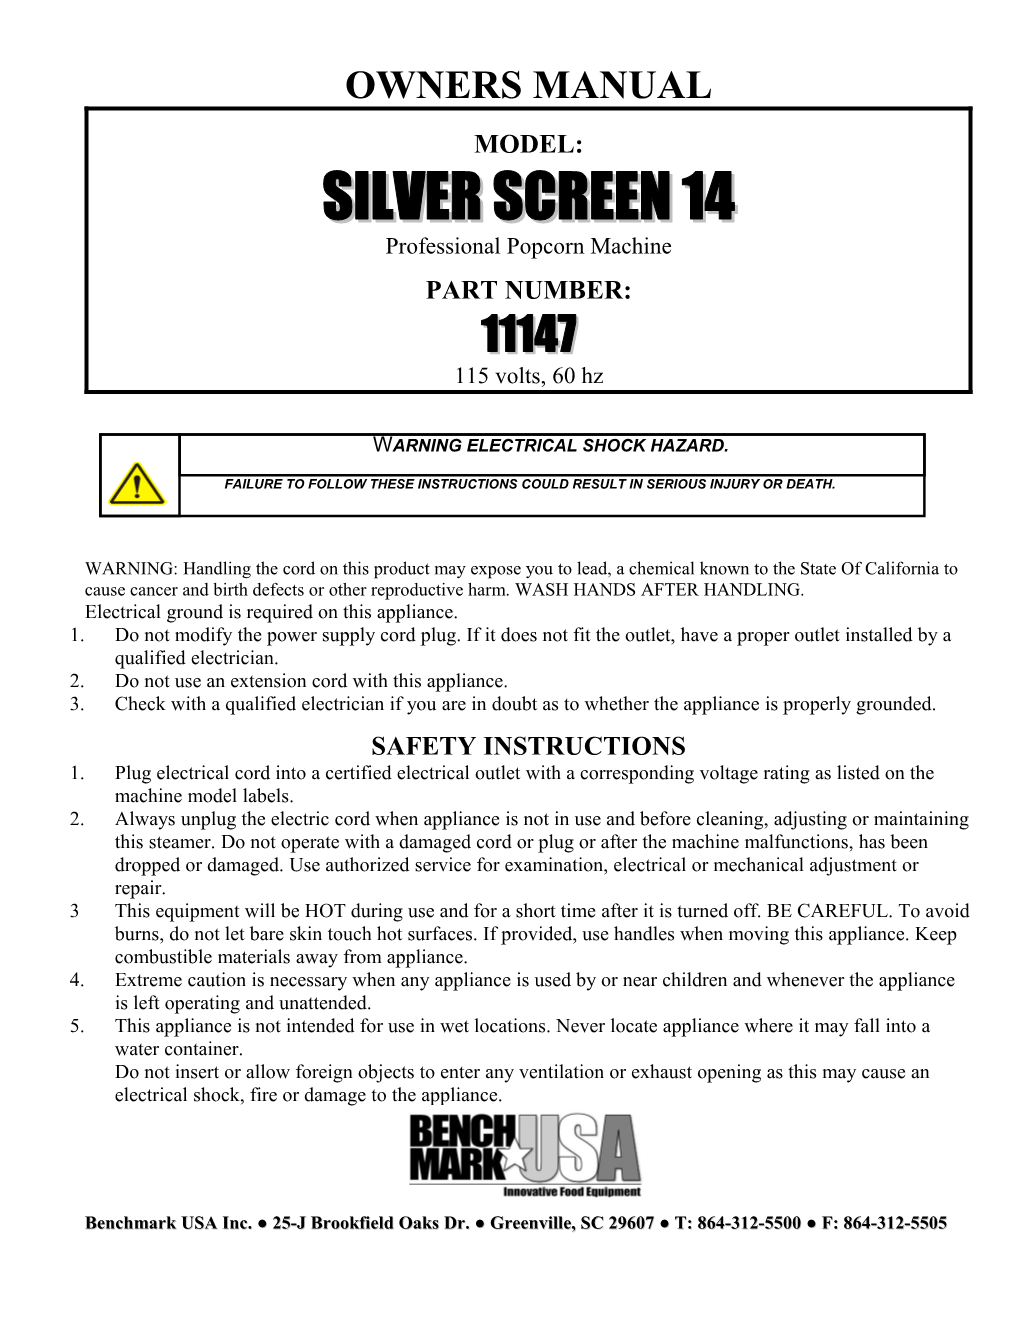 Silver Screen 14